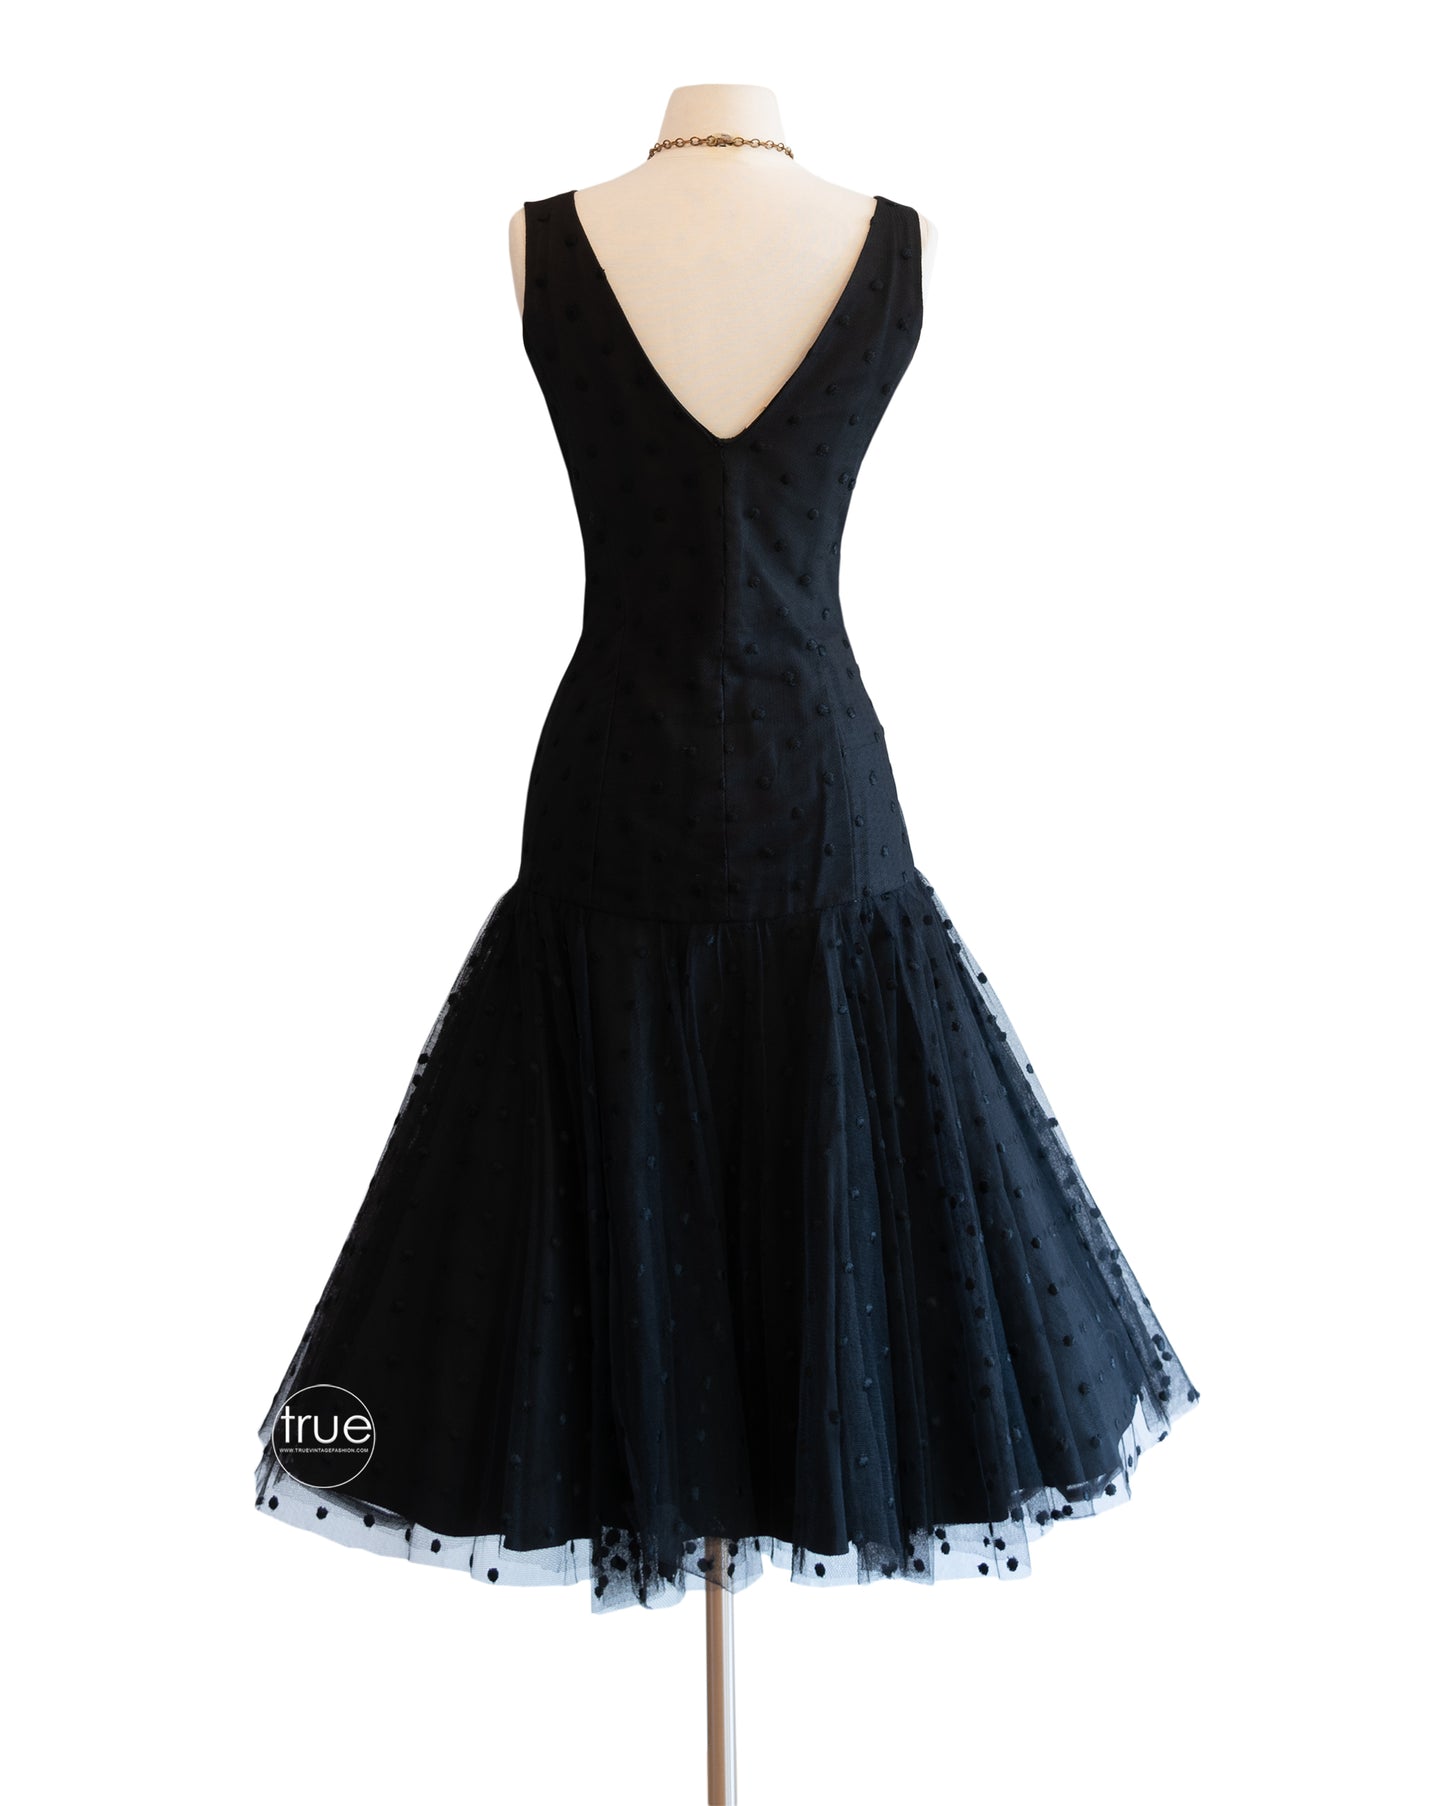 vintage 1950's dress ...fabulous EMMA DOMB black polka dot tulle CHA CHA dress